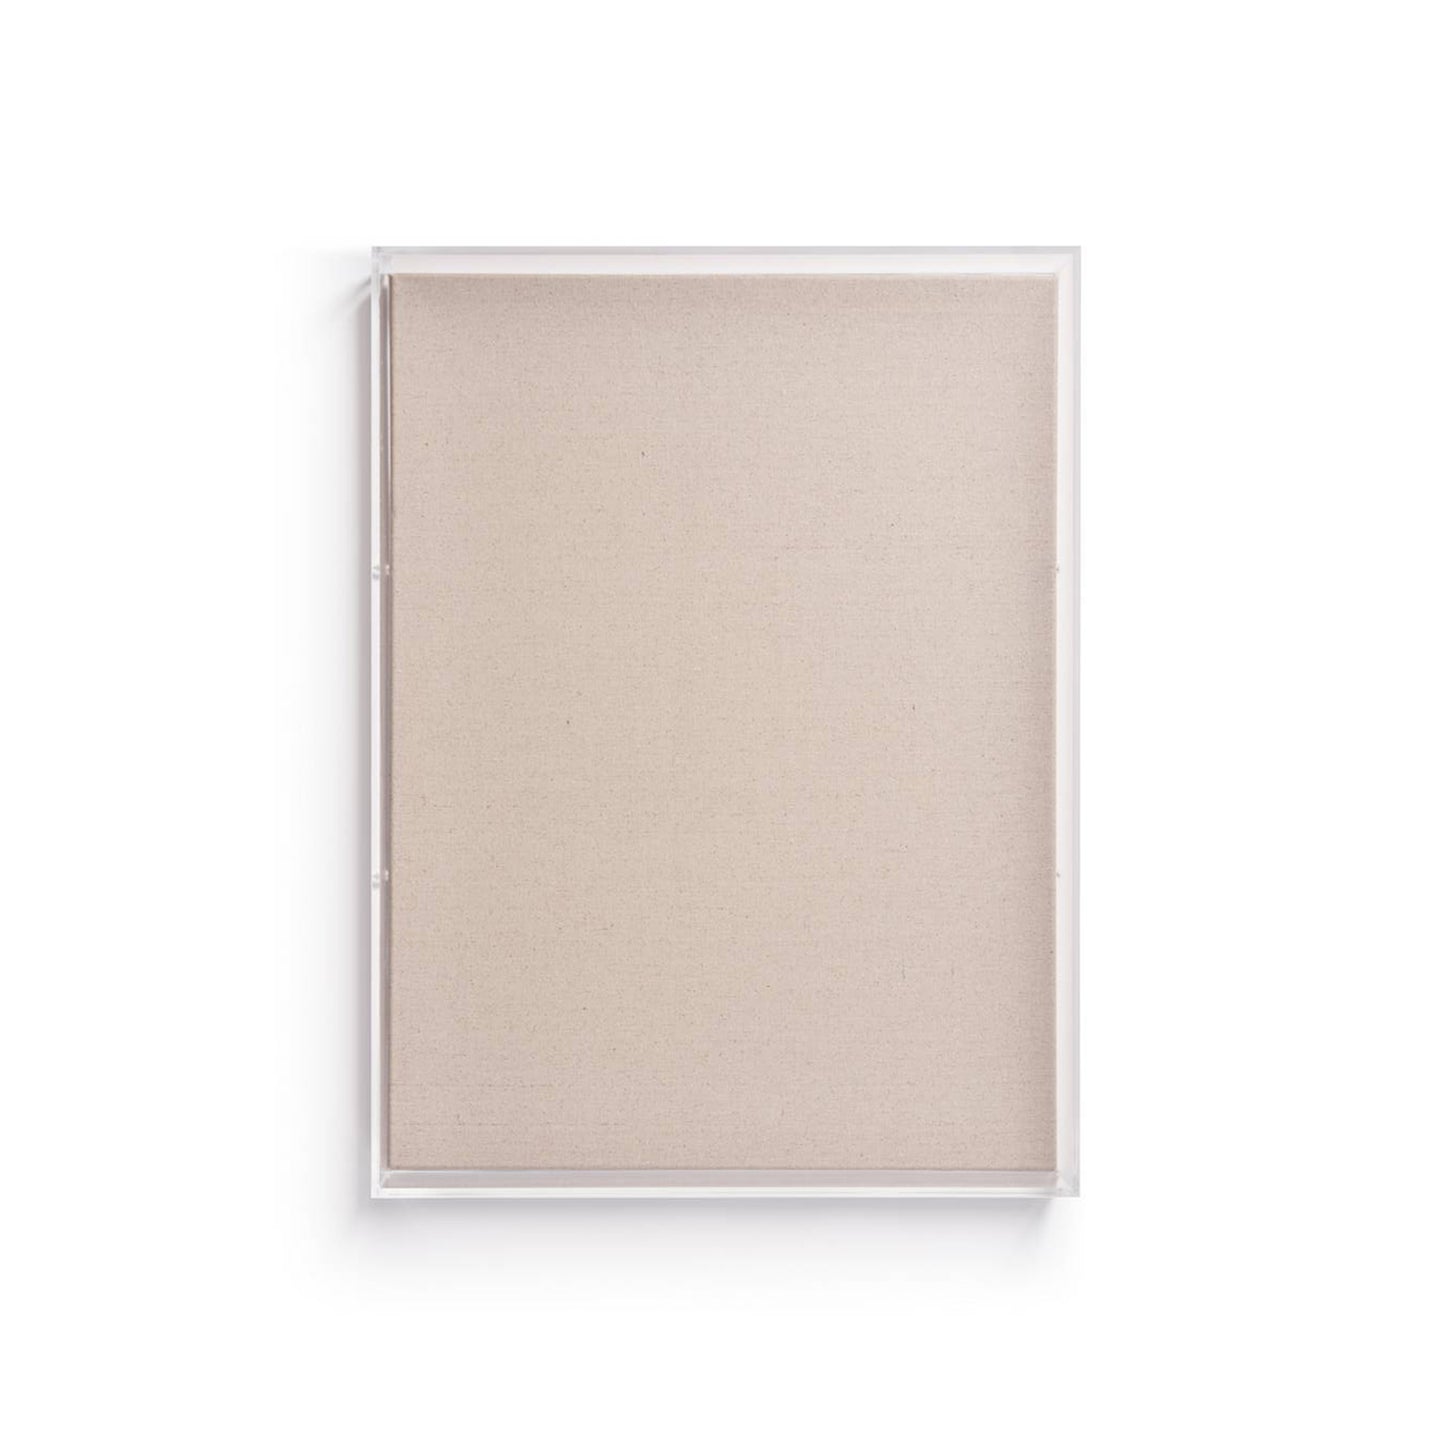 18" x 24" x 3" Modern Acrylic Shadowbox with Linen Canvas - UV Grade